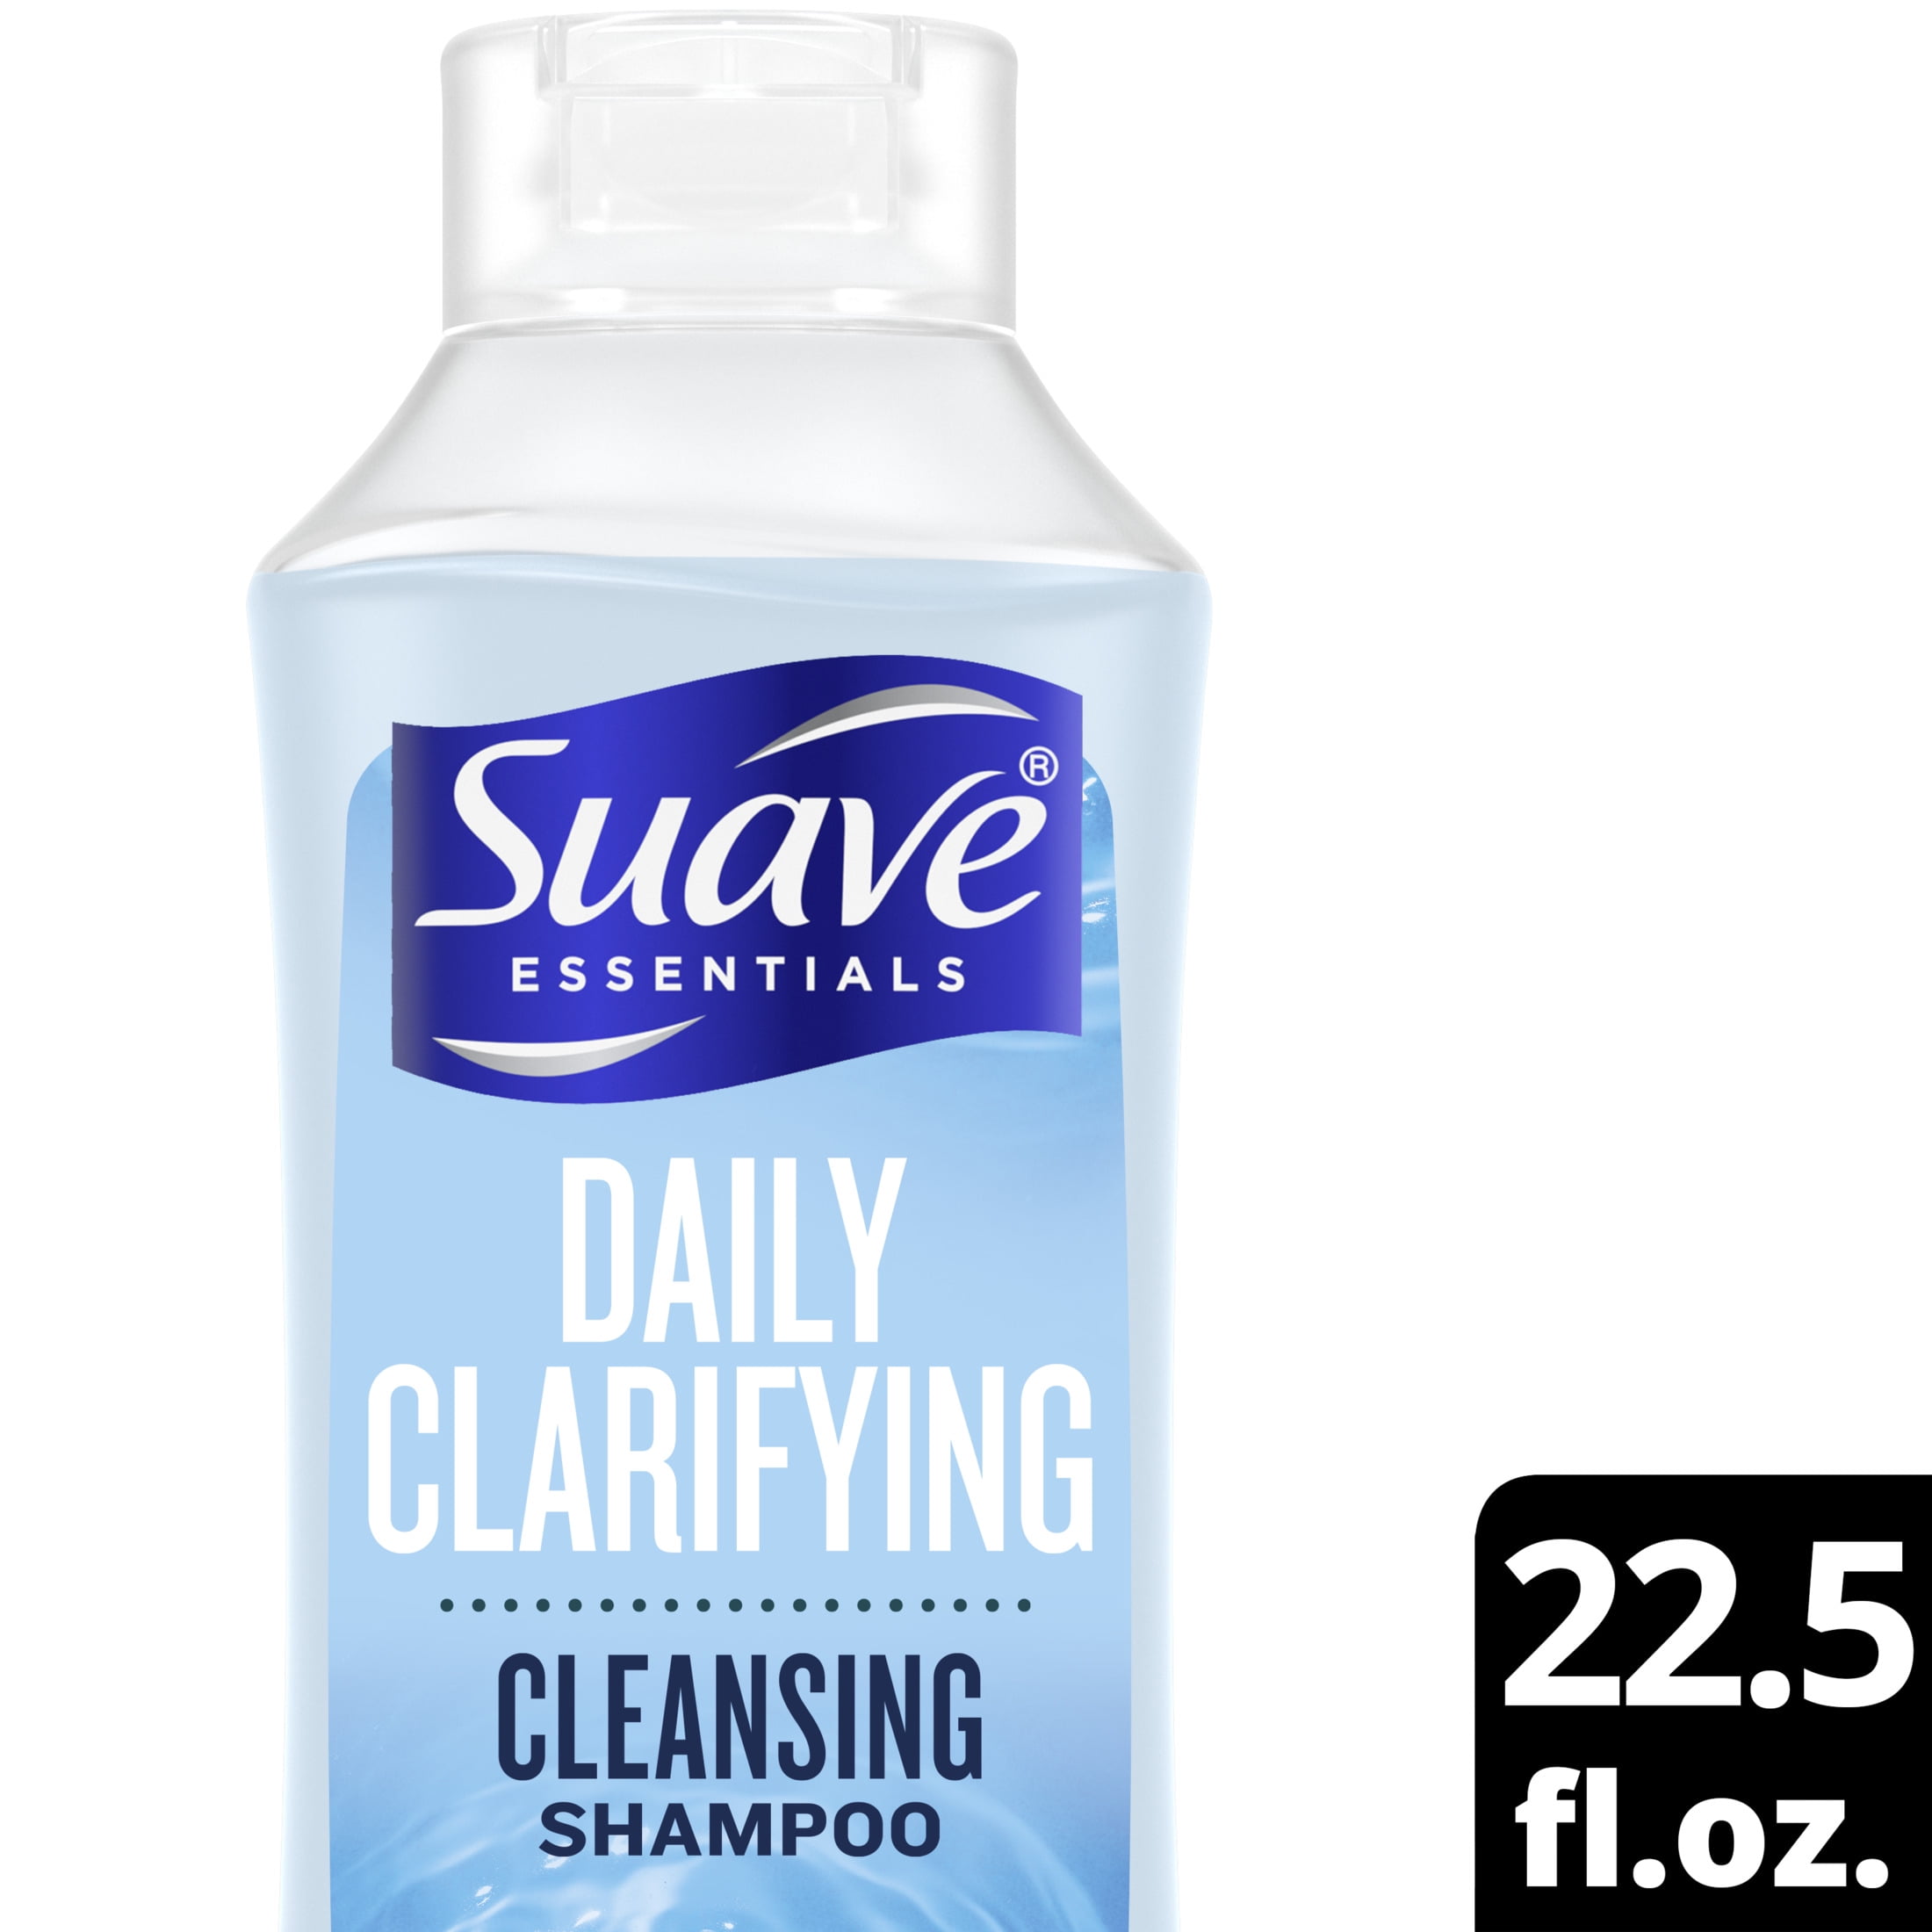 Suave Daily Clarifying Cleansing Shampoo 22.5 oz